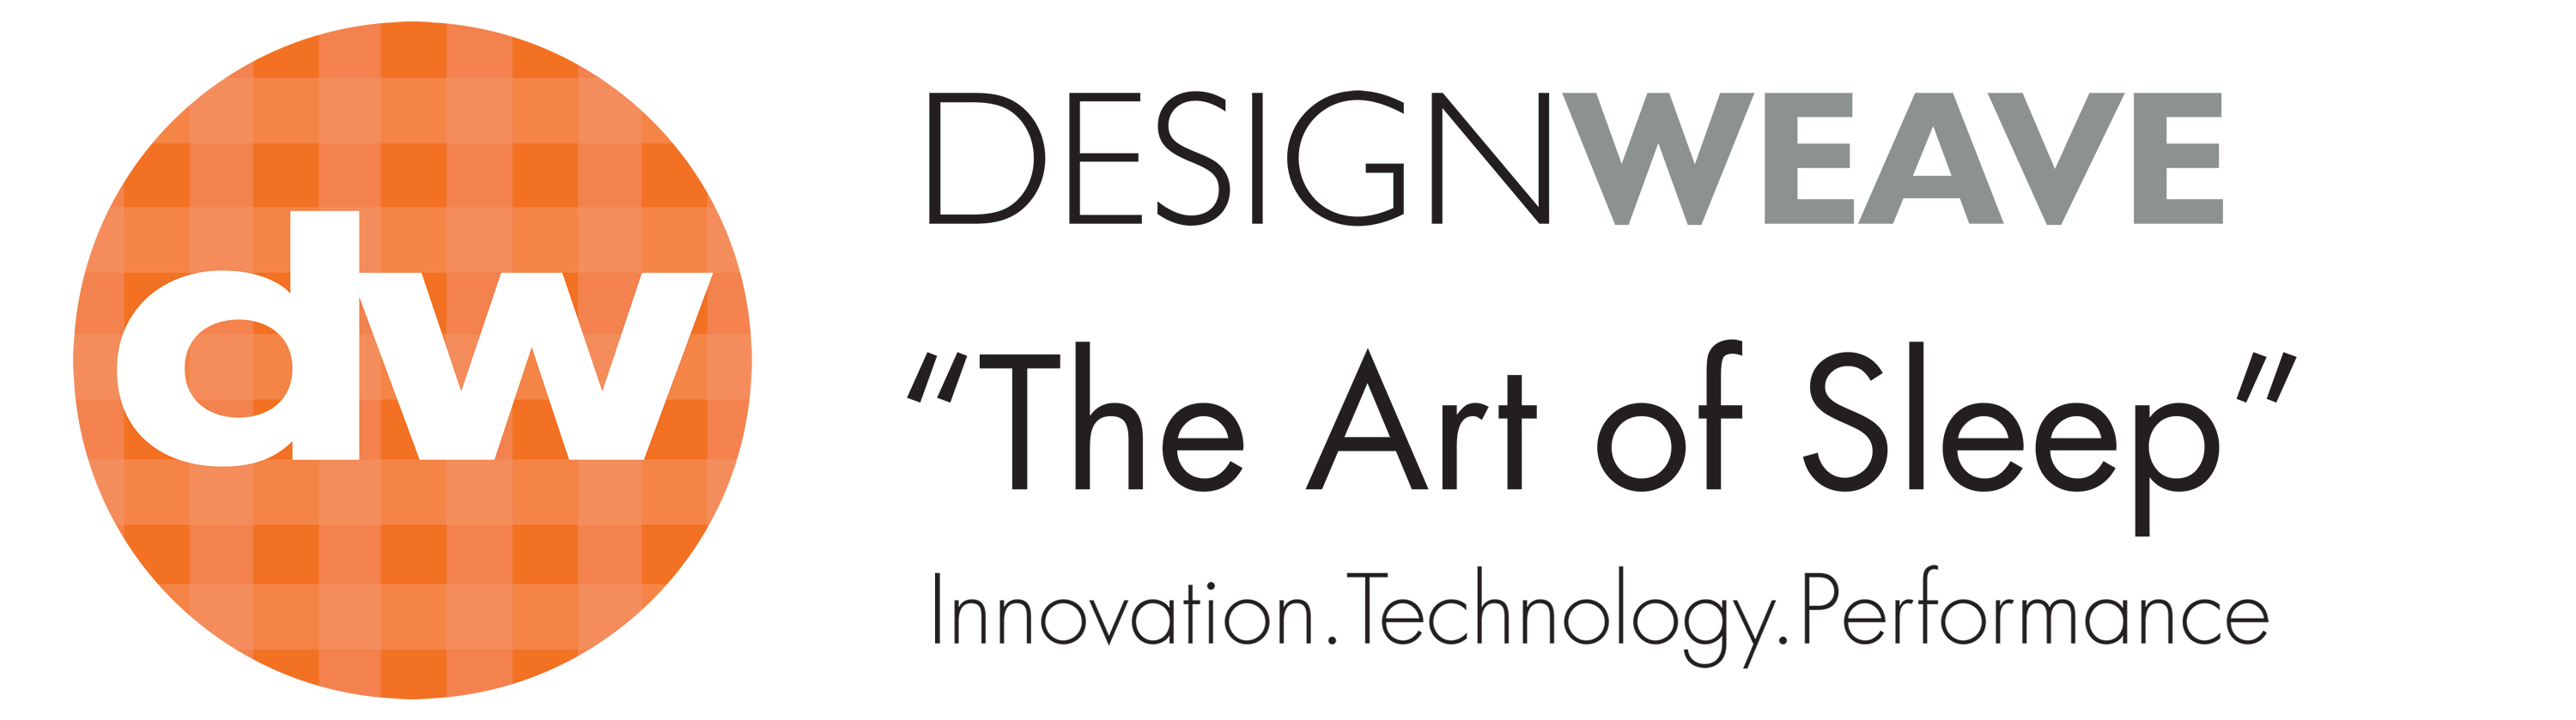 designweave website logo